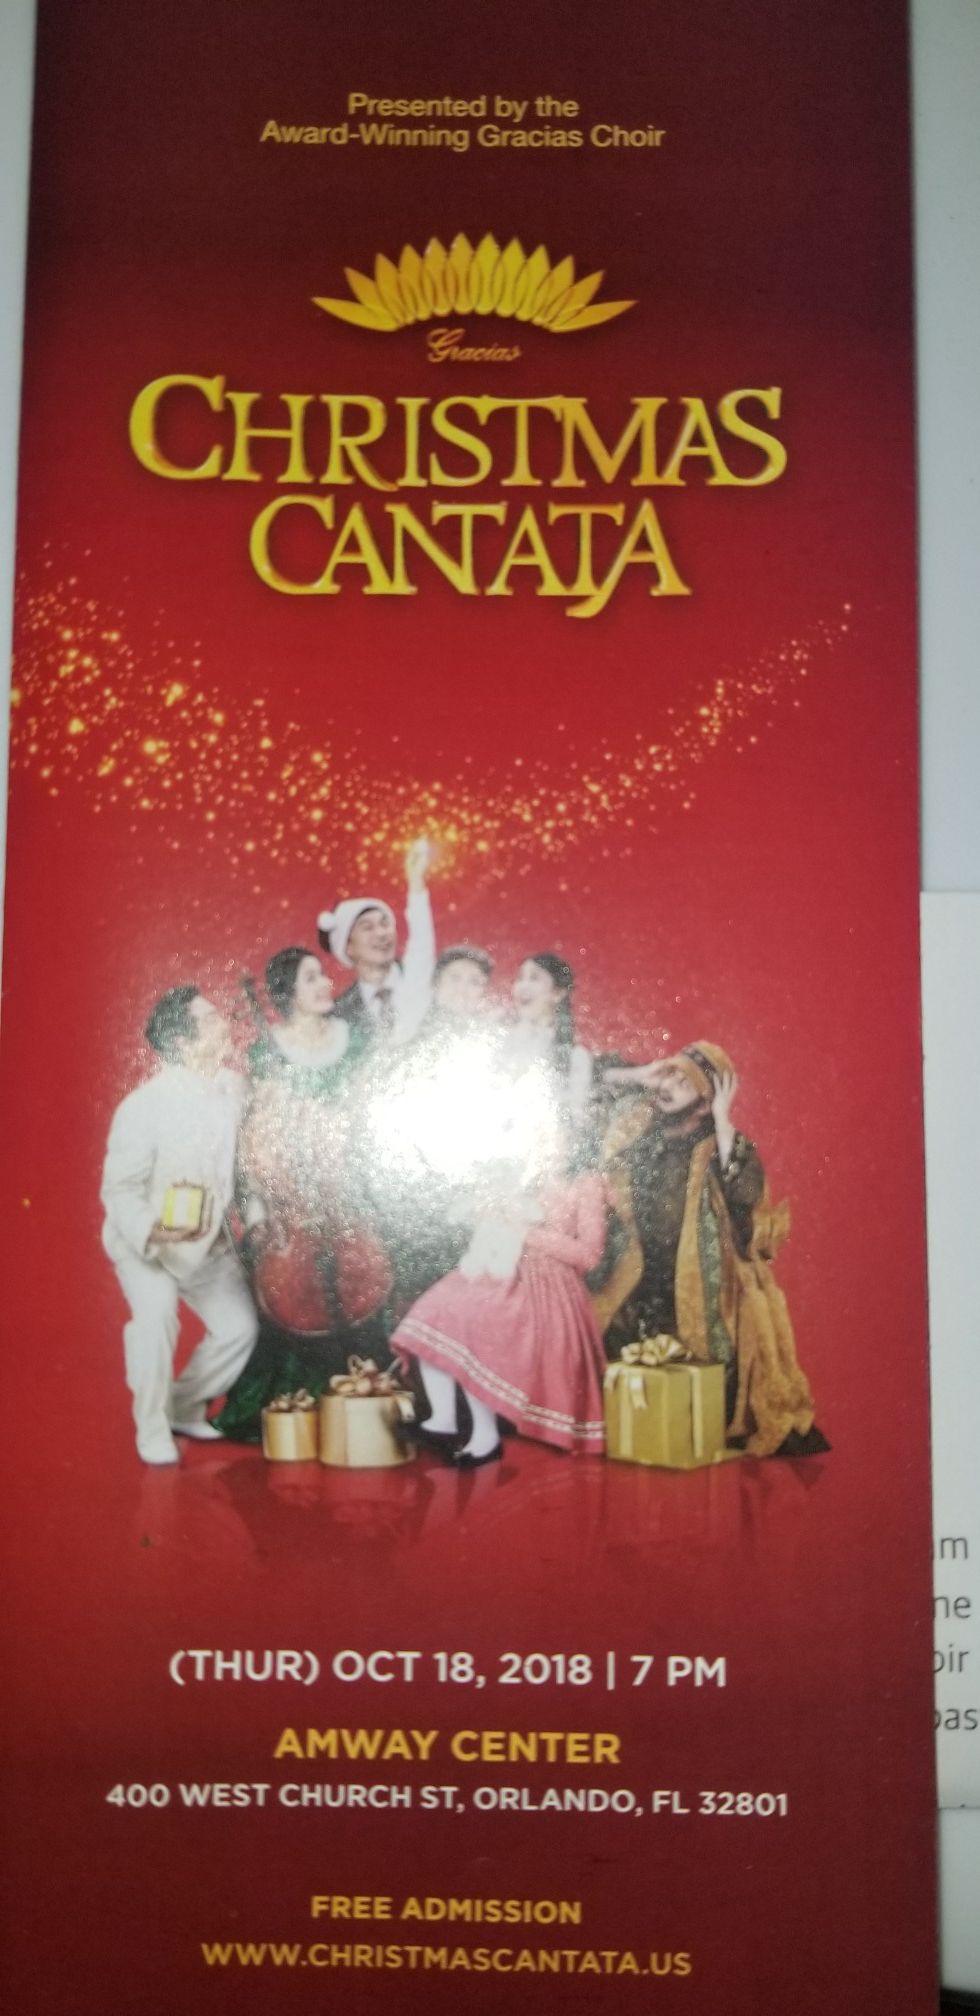 Gracias Christmas Cantata 2018 tour FREE tickets